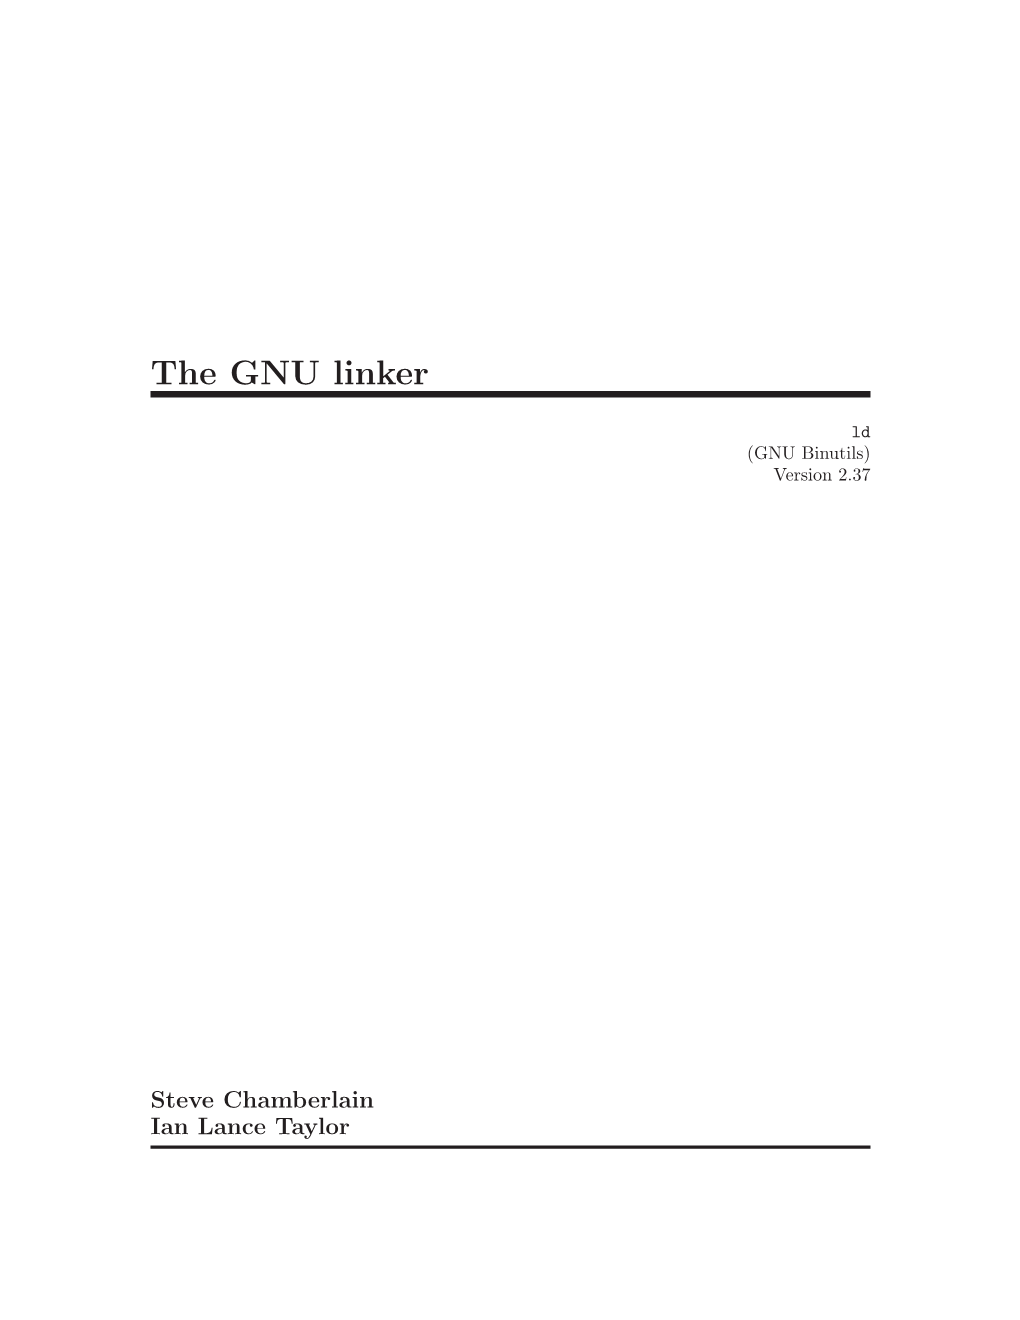 The GNU Linker